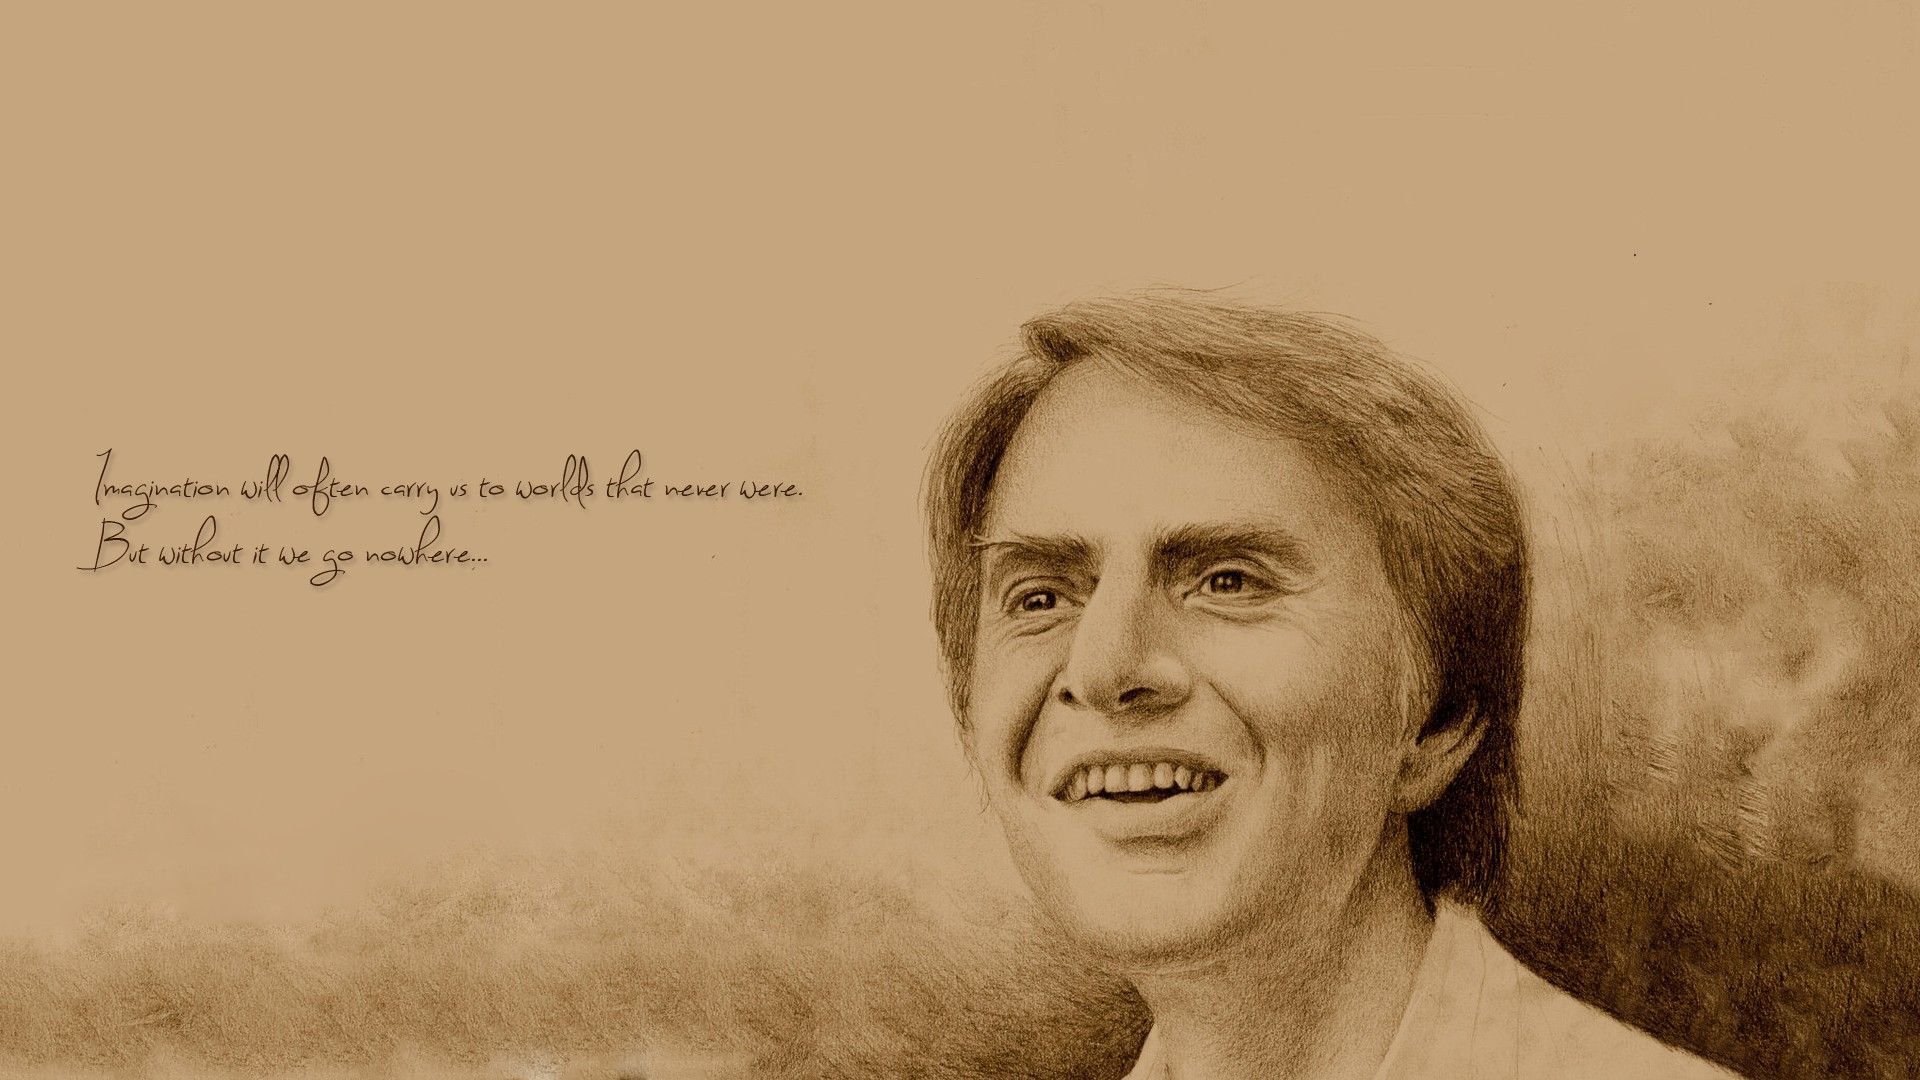 Quotes Carl Sagan Science #quotes #wallpaper